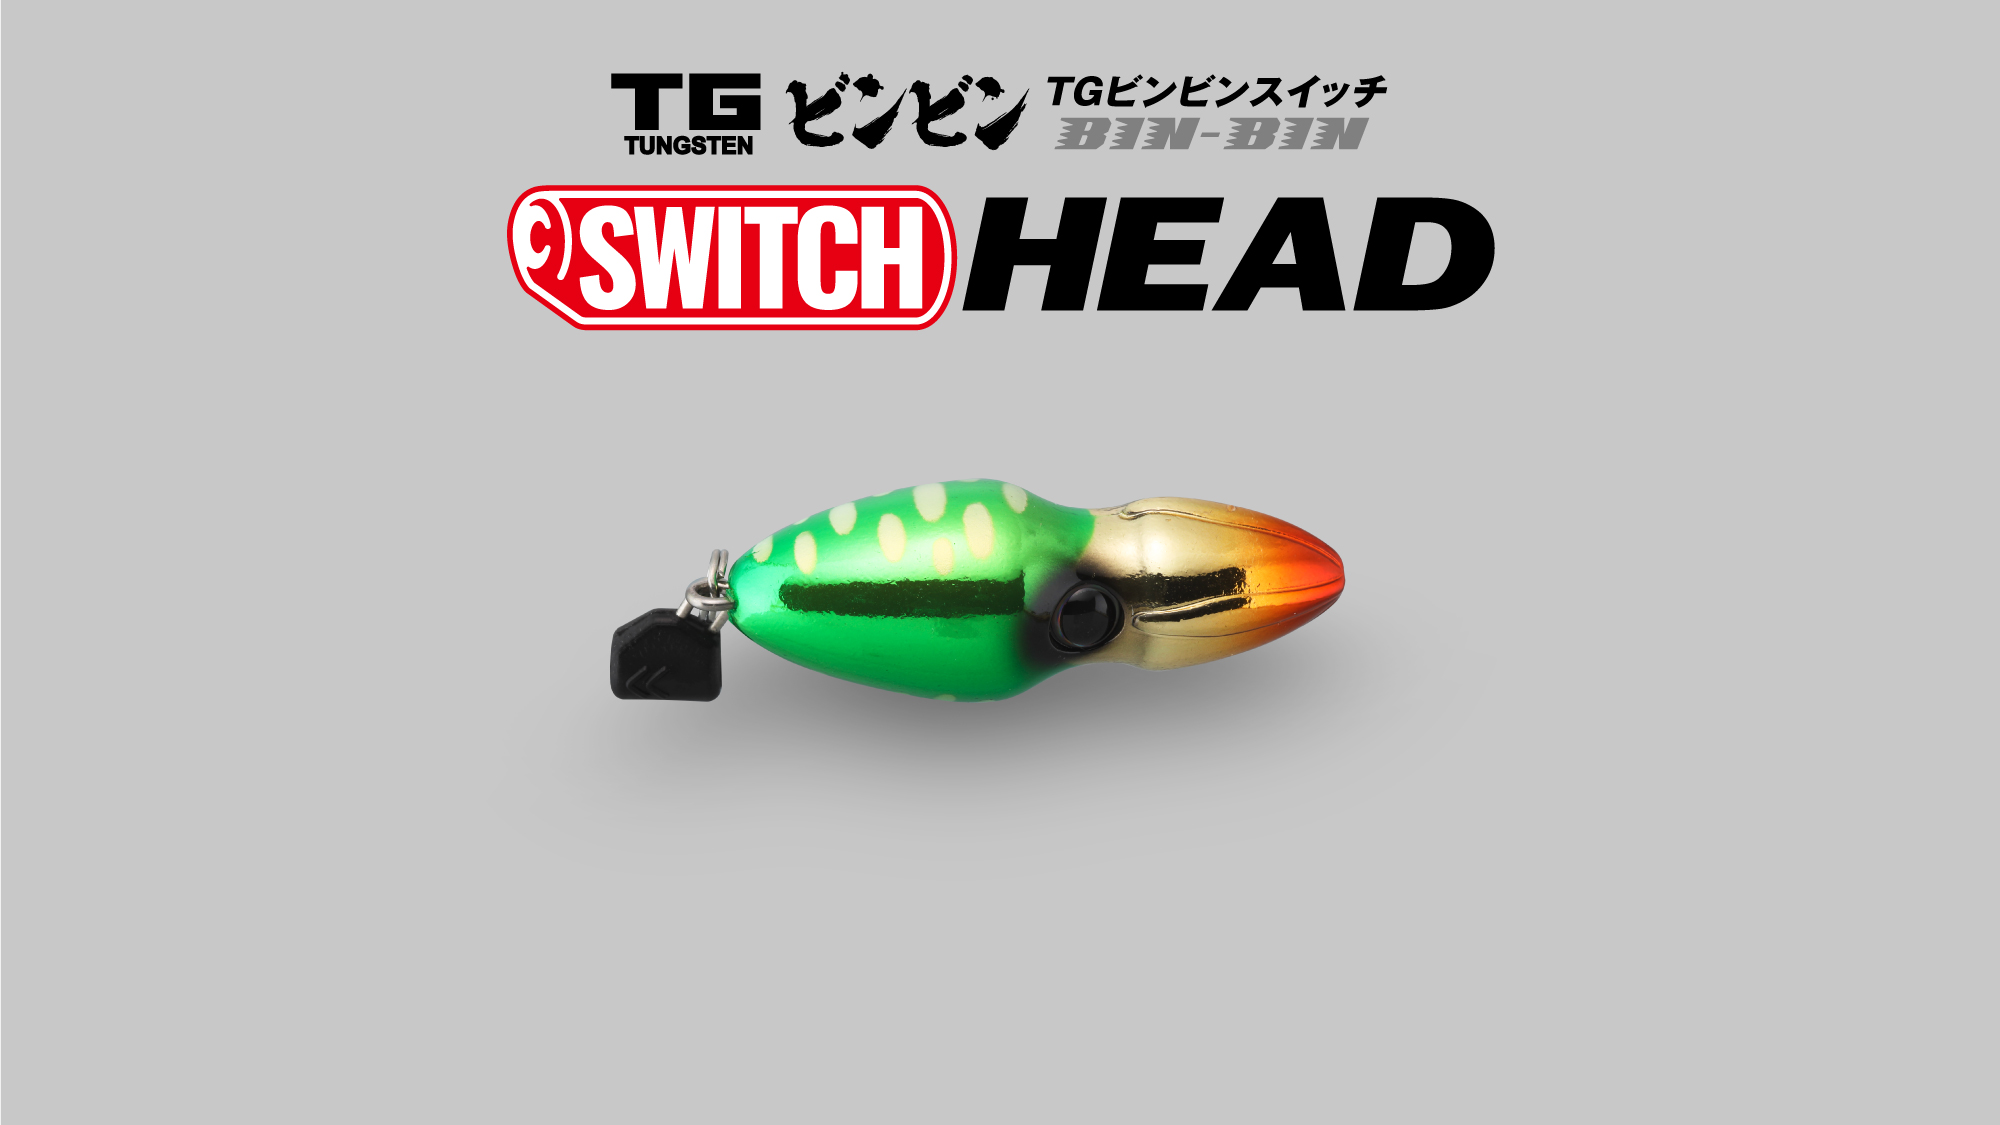 TG BINBIN SWITCH HEAD / TGビンビンスイッチ ヘッド(タングステン製